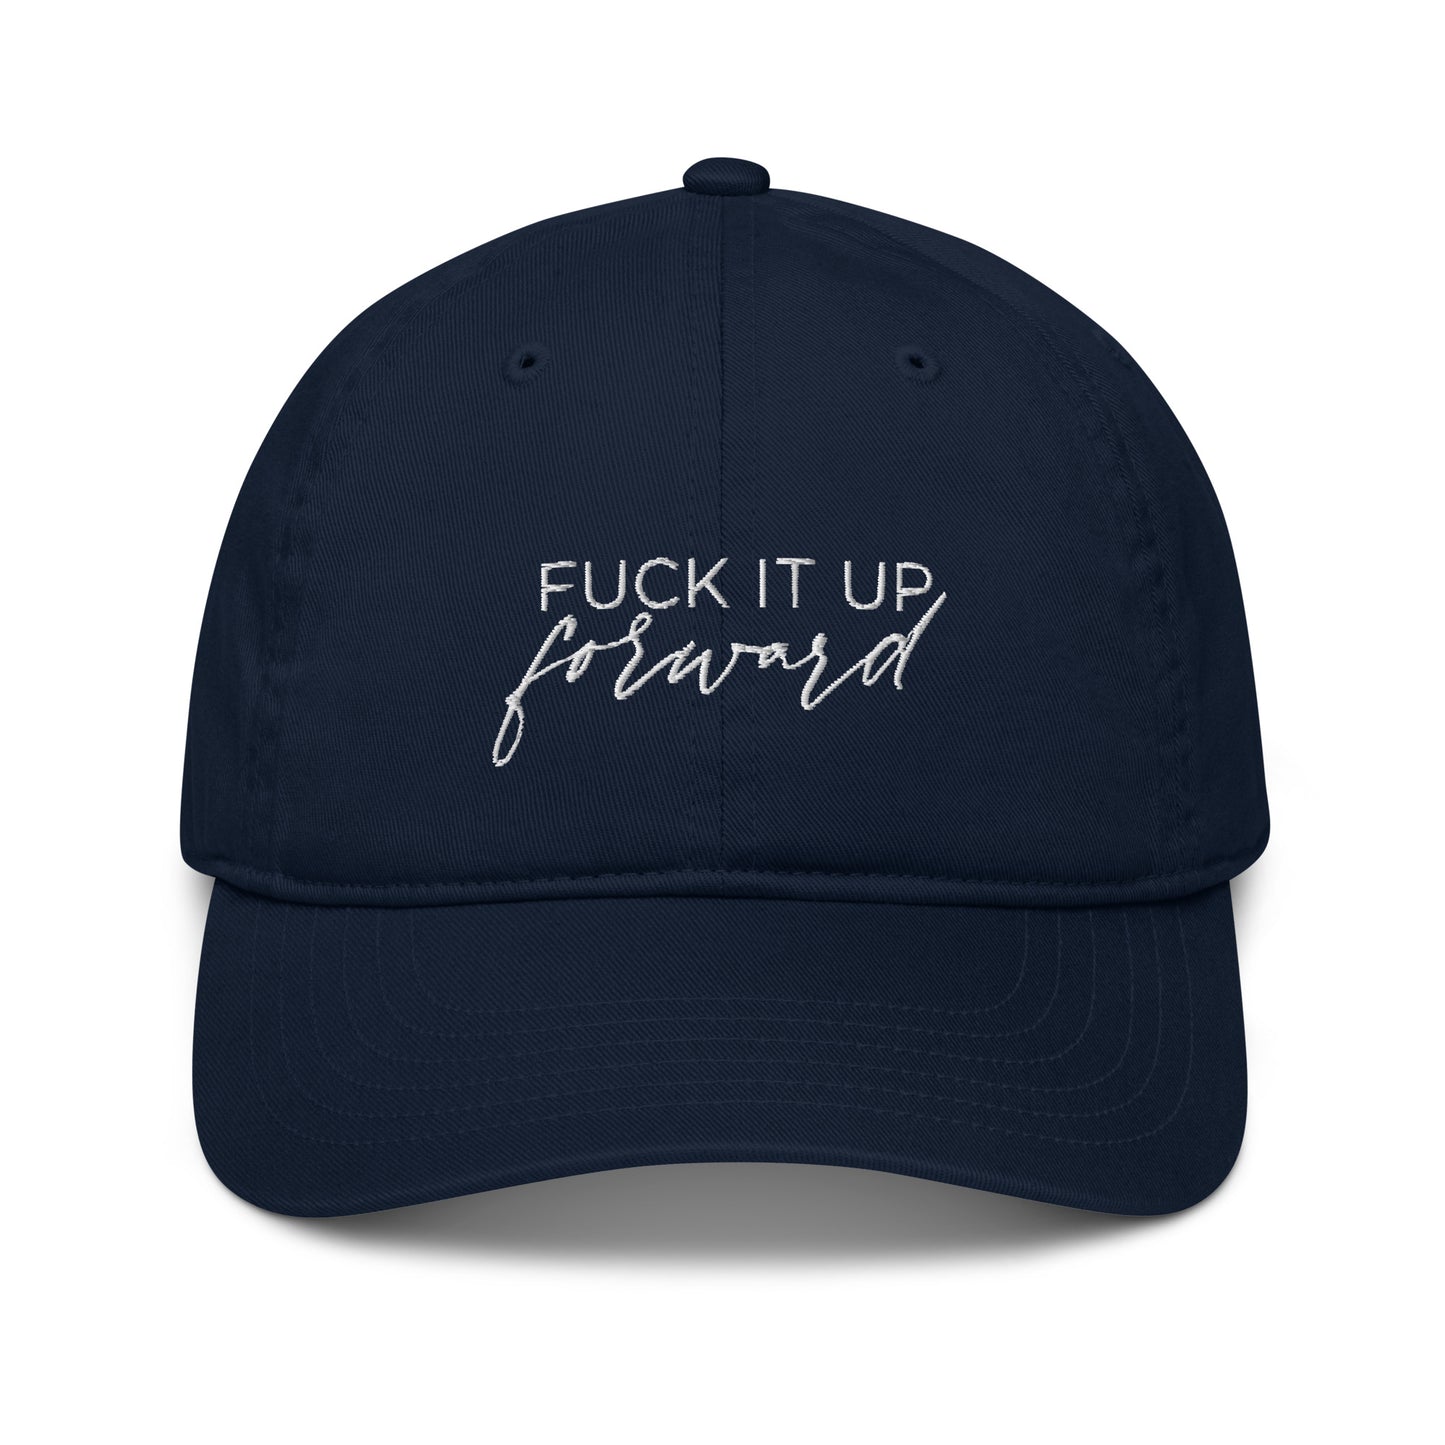 F it up forward - Hat